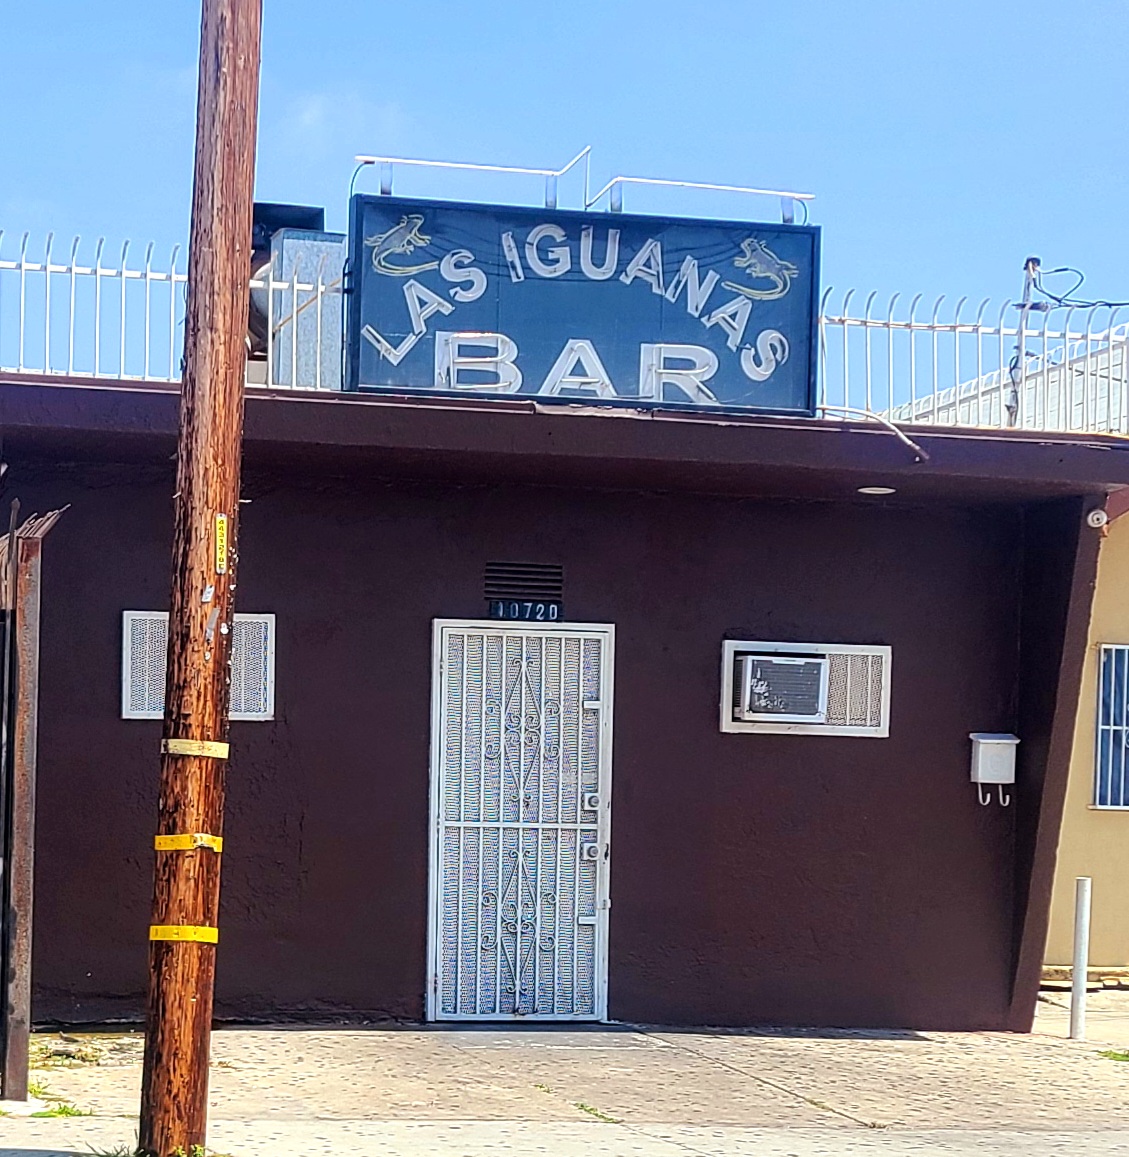 Las Iguanas Bar